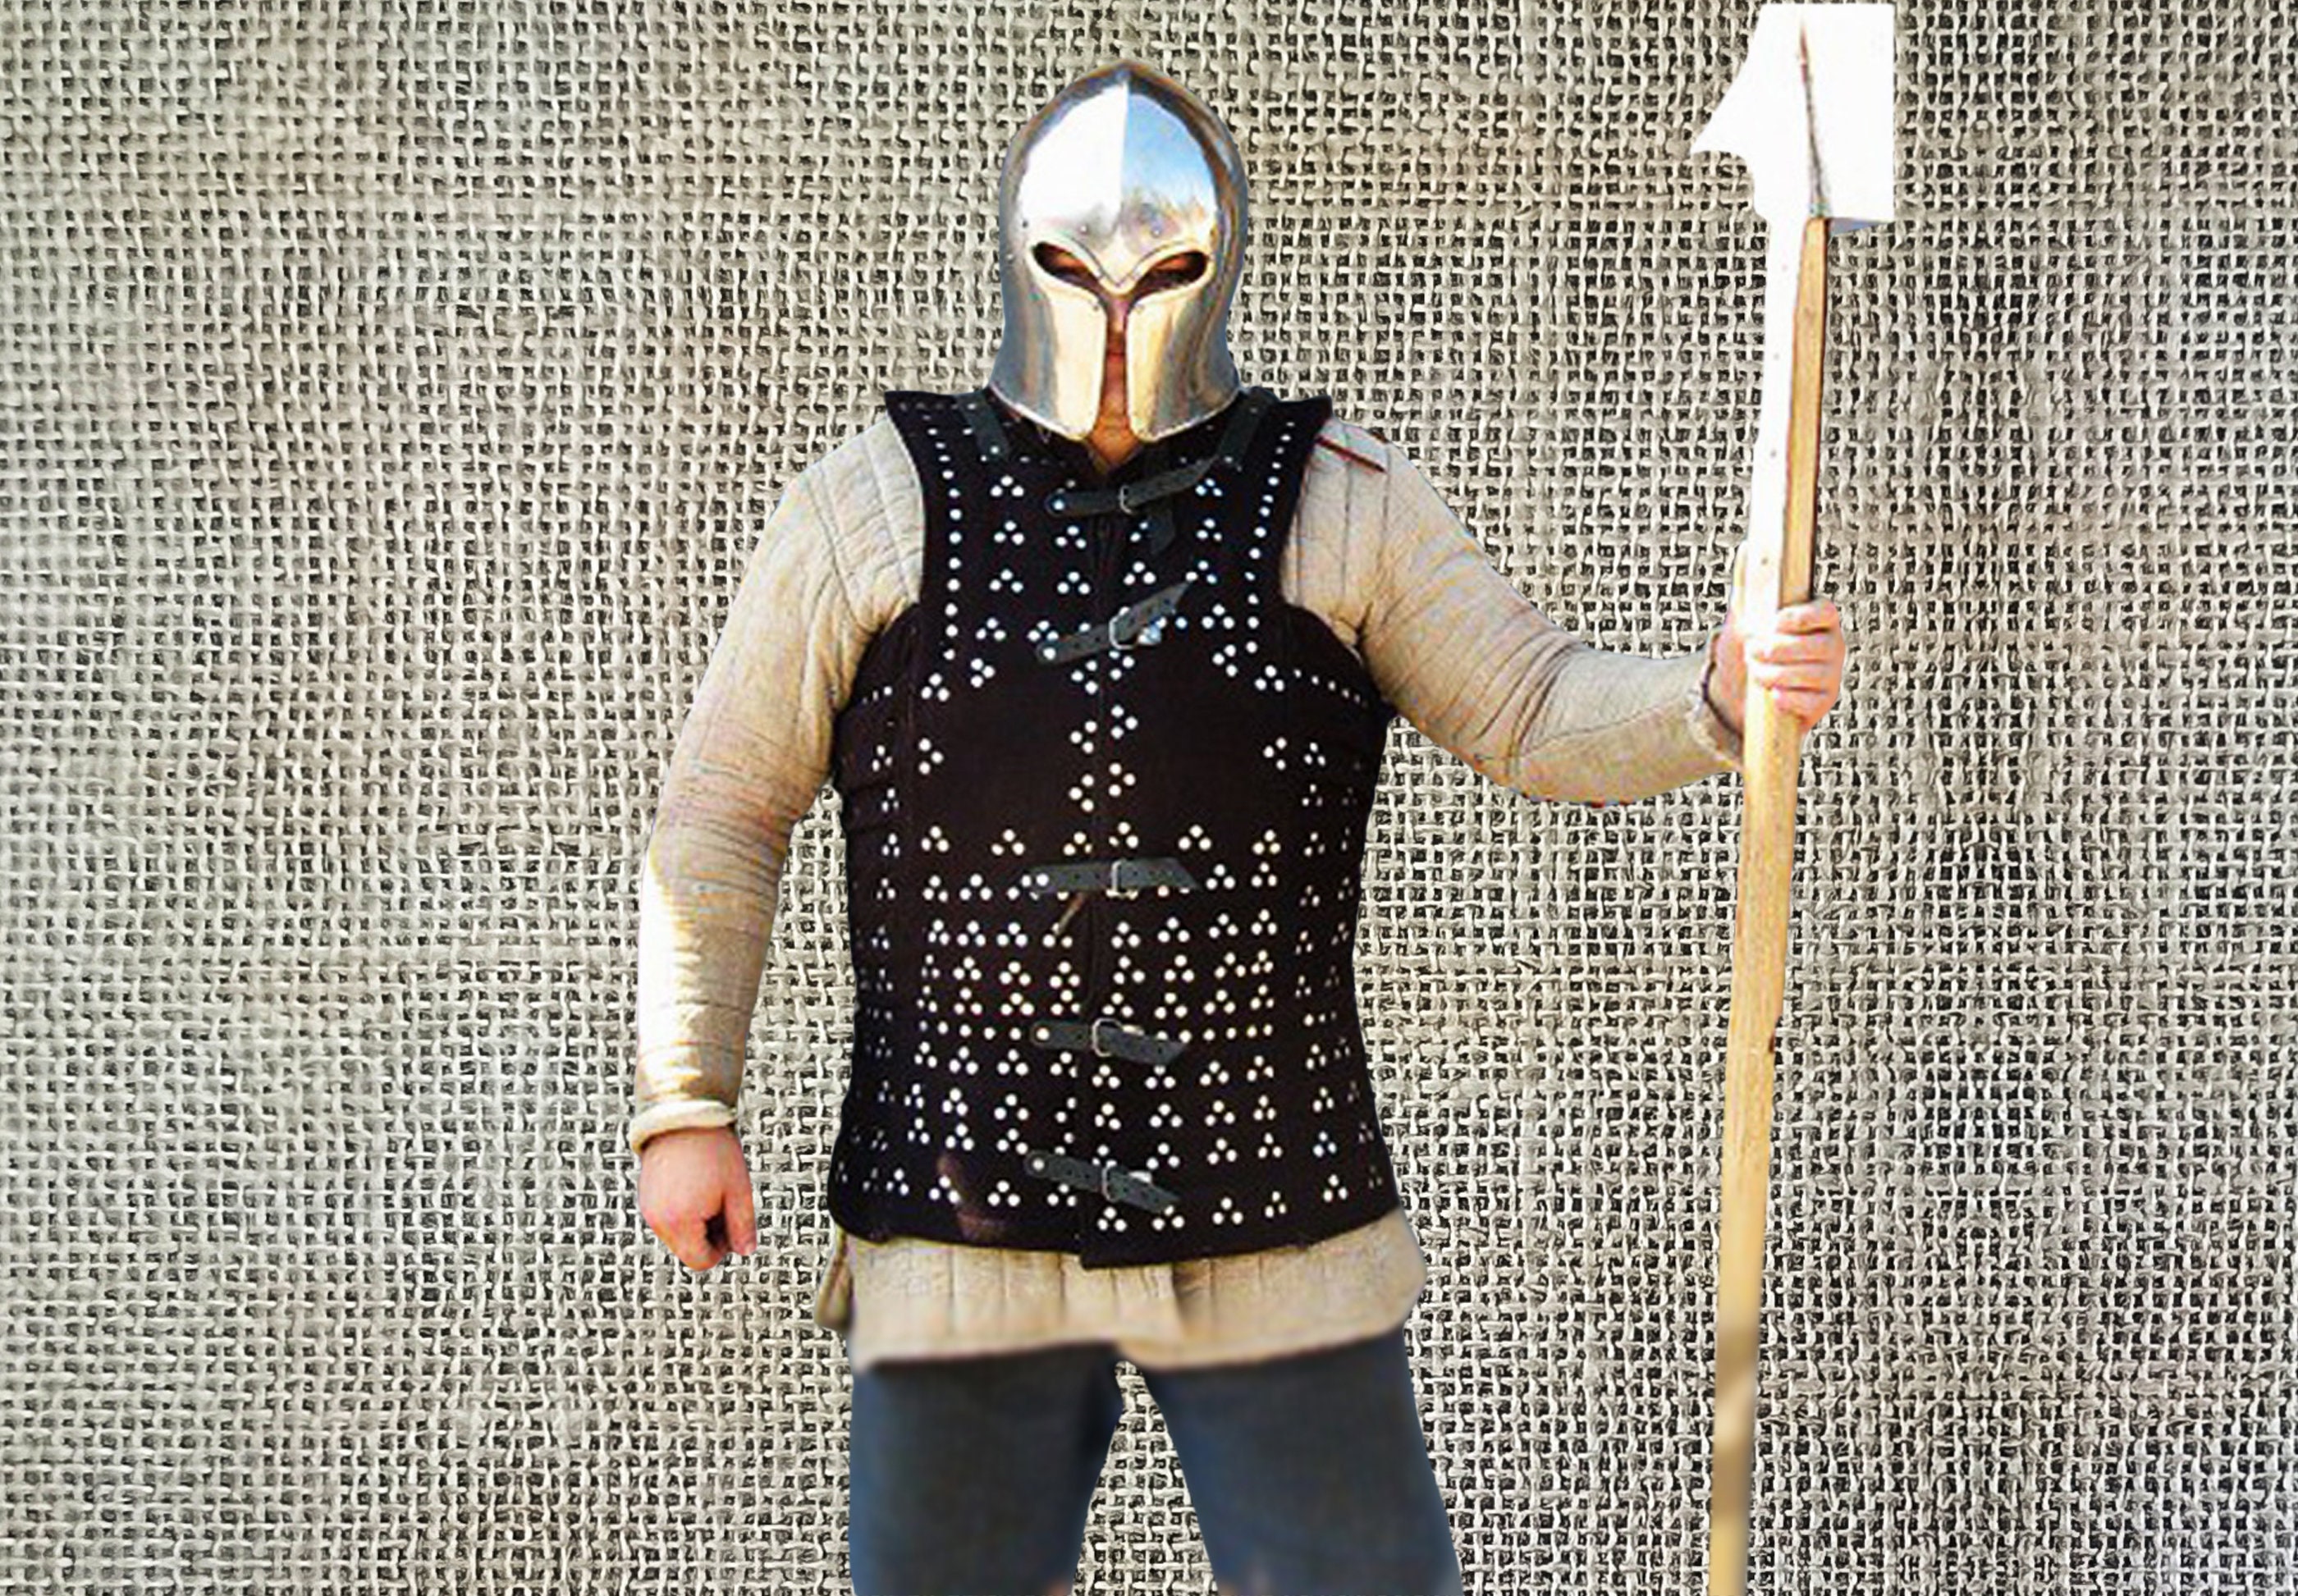 Shadiversity Brigandine Armor Set eva Foam, Medieval Warrior